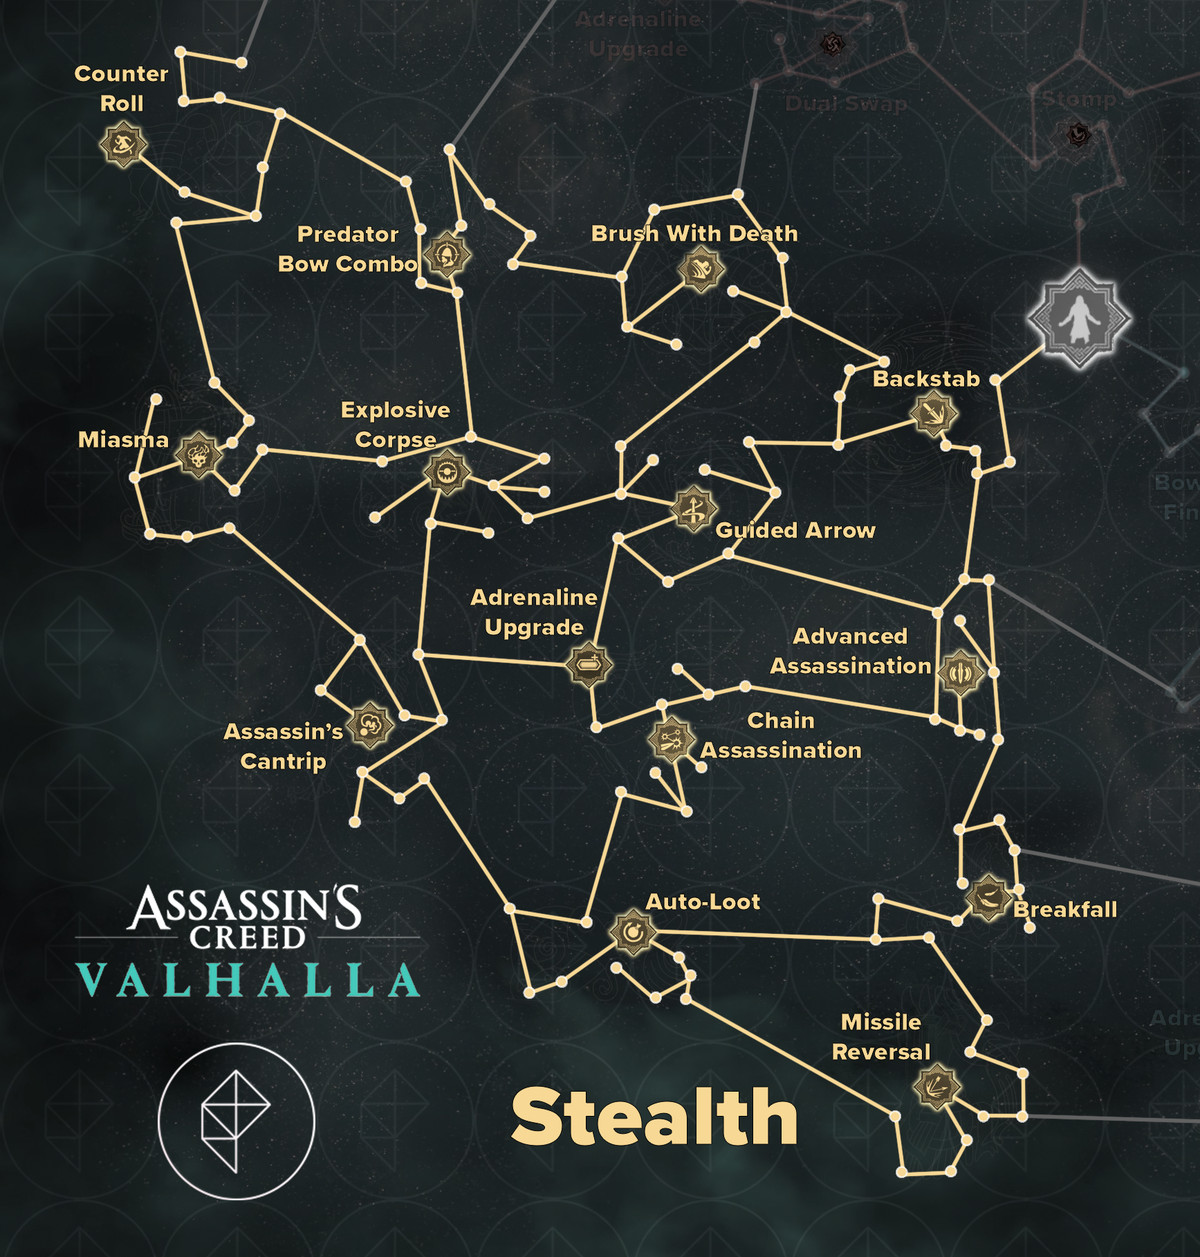 Stealth-focused skills in Assassin’s Creed Valhalla